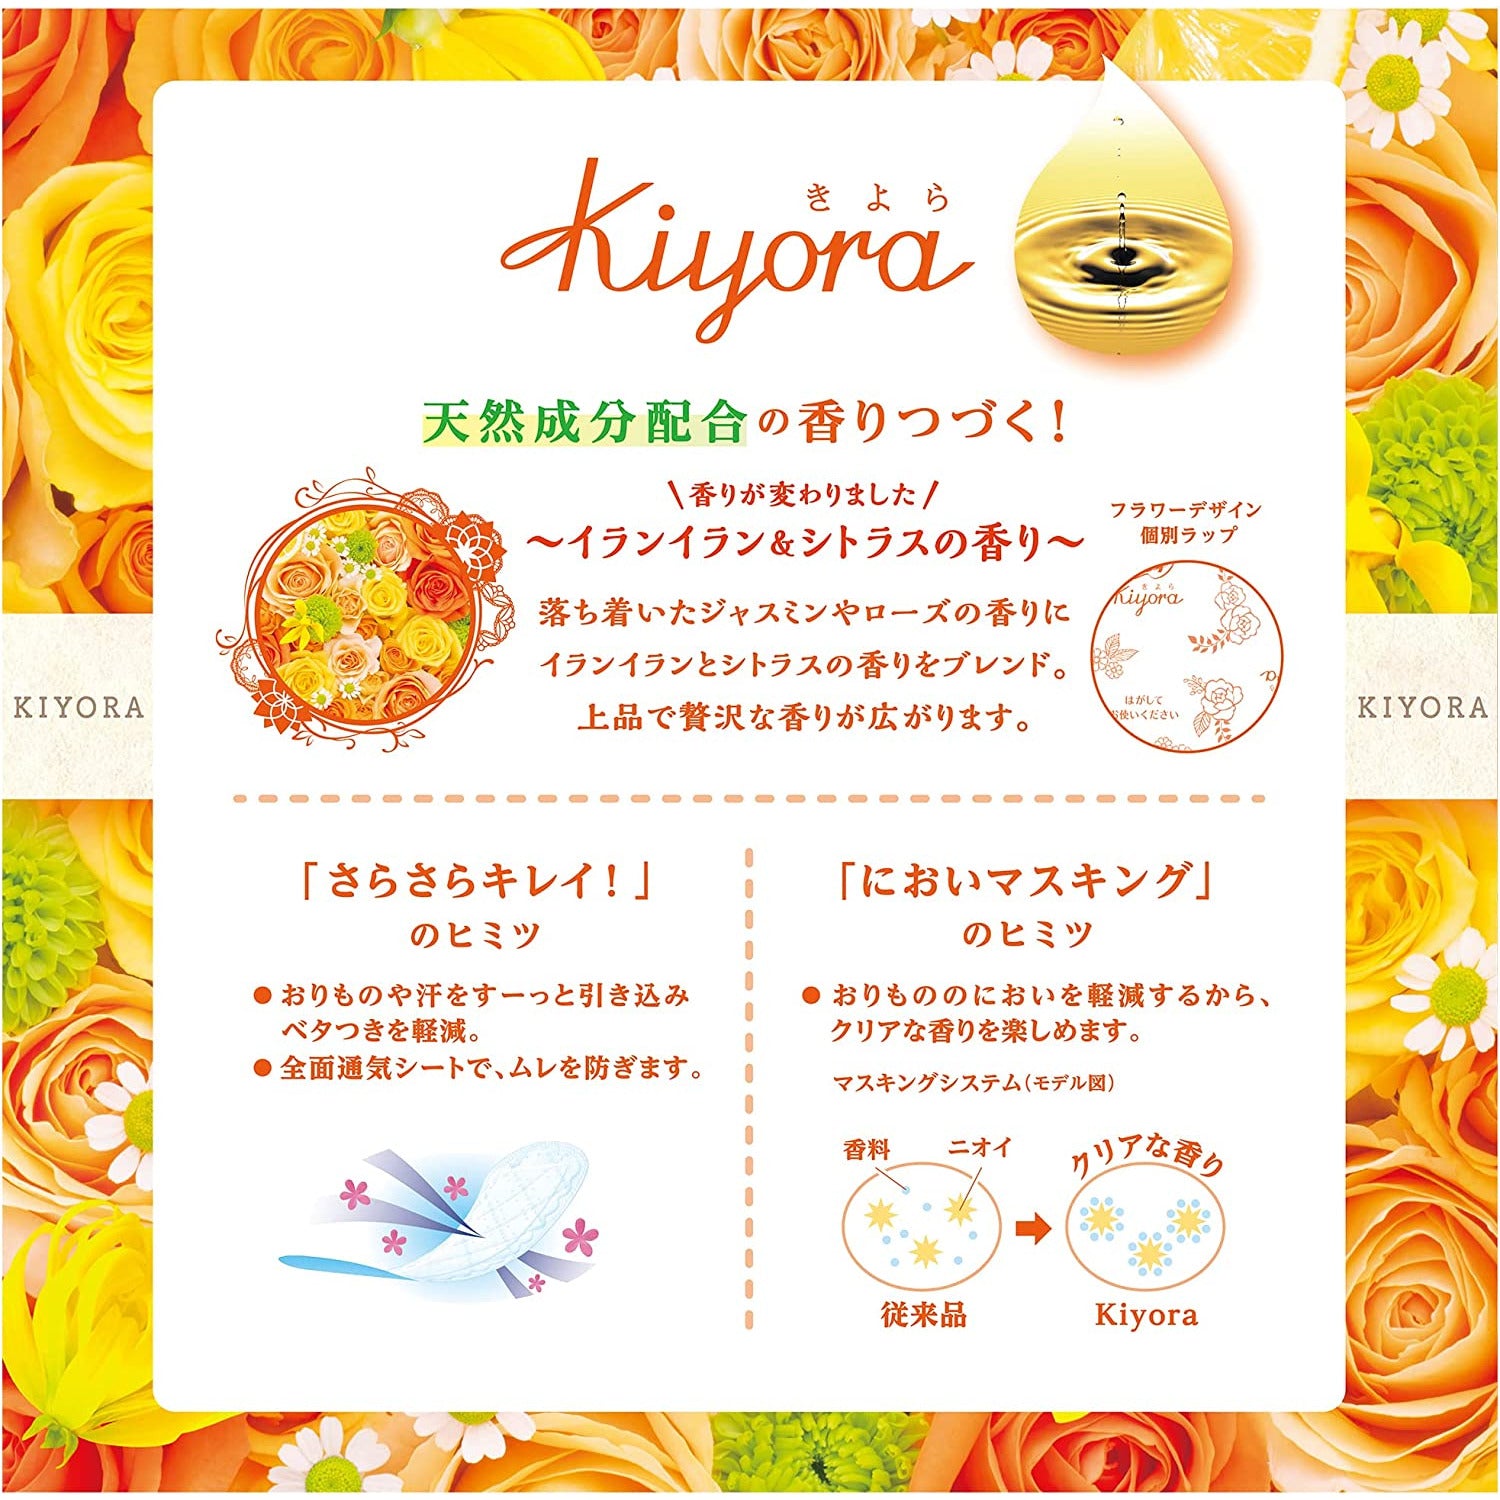 Unicharm Sofy sanitary napkin Kiyora Floral & Citrus 72 sheets